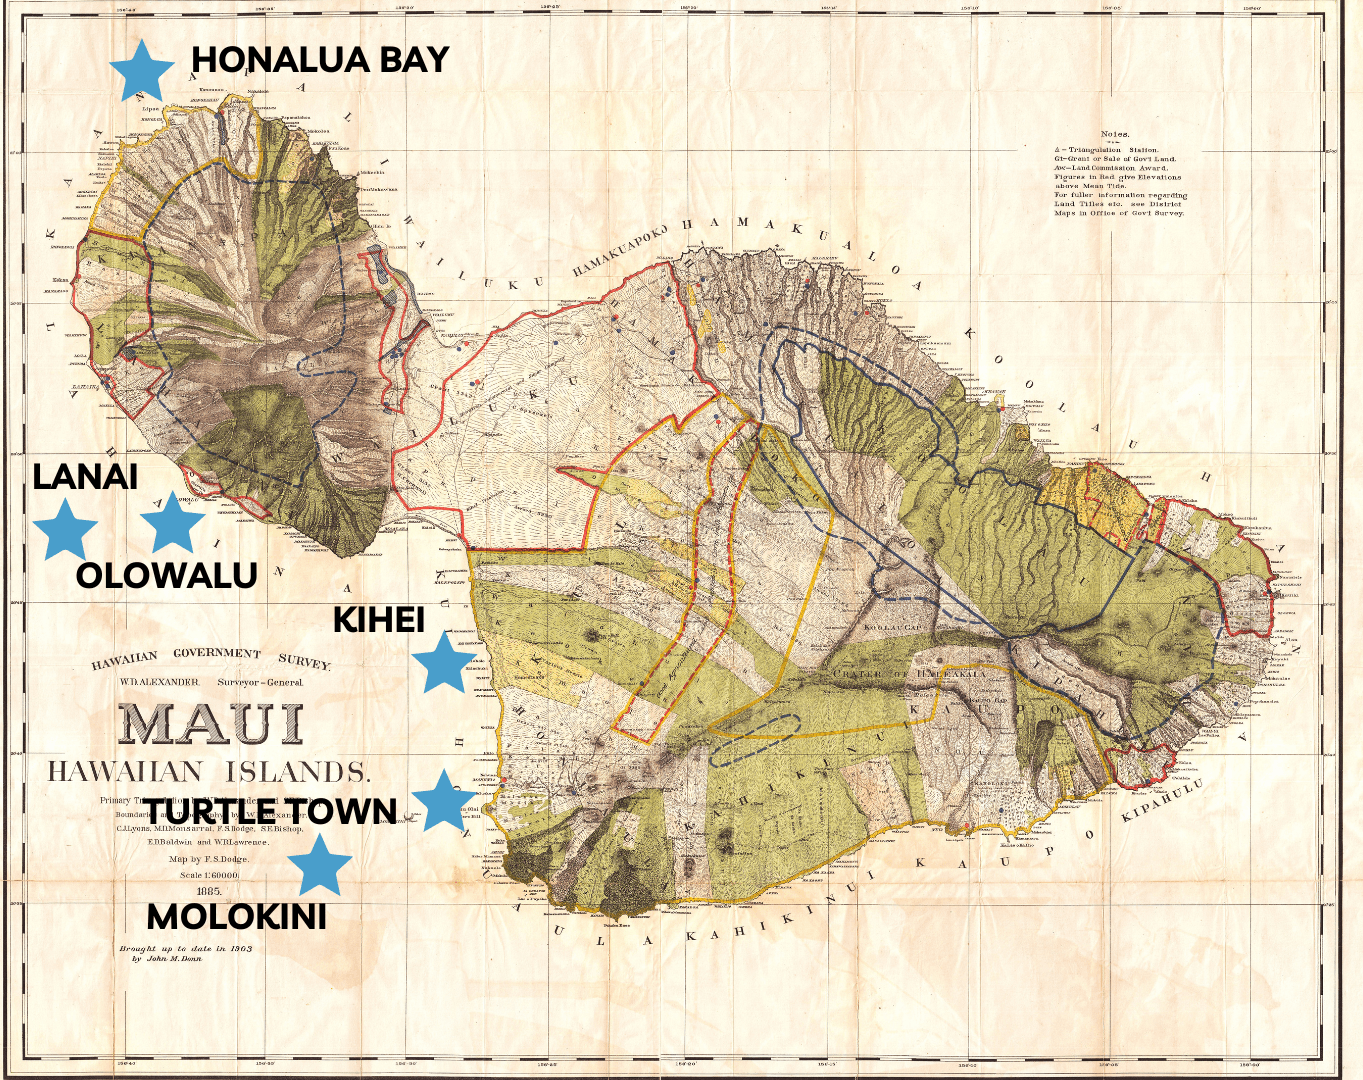 Maui Ocean